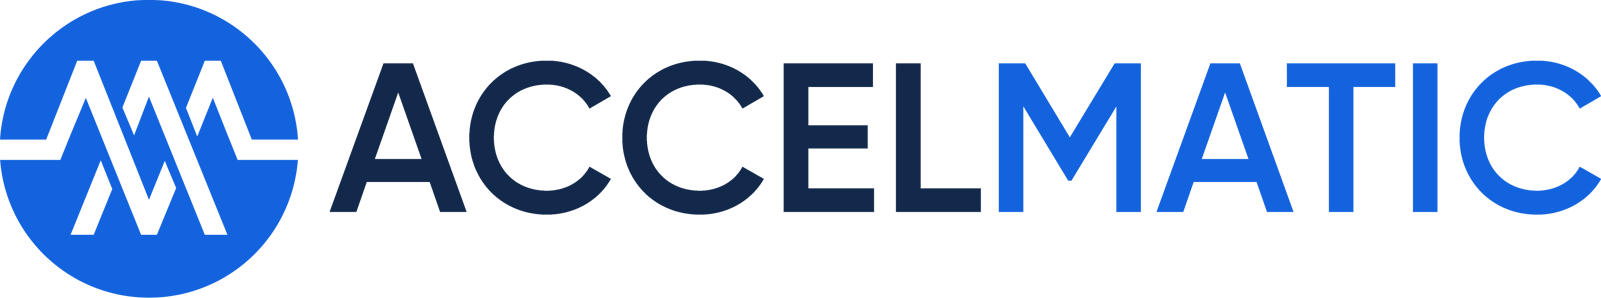 accelmatic website logo